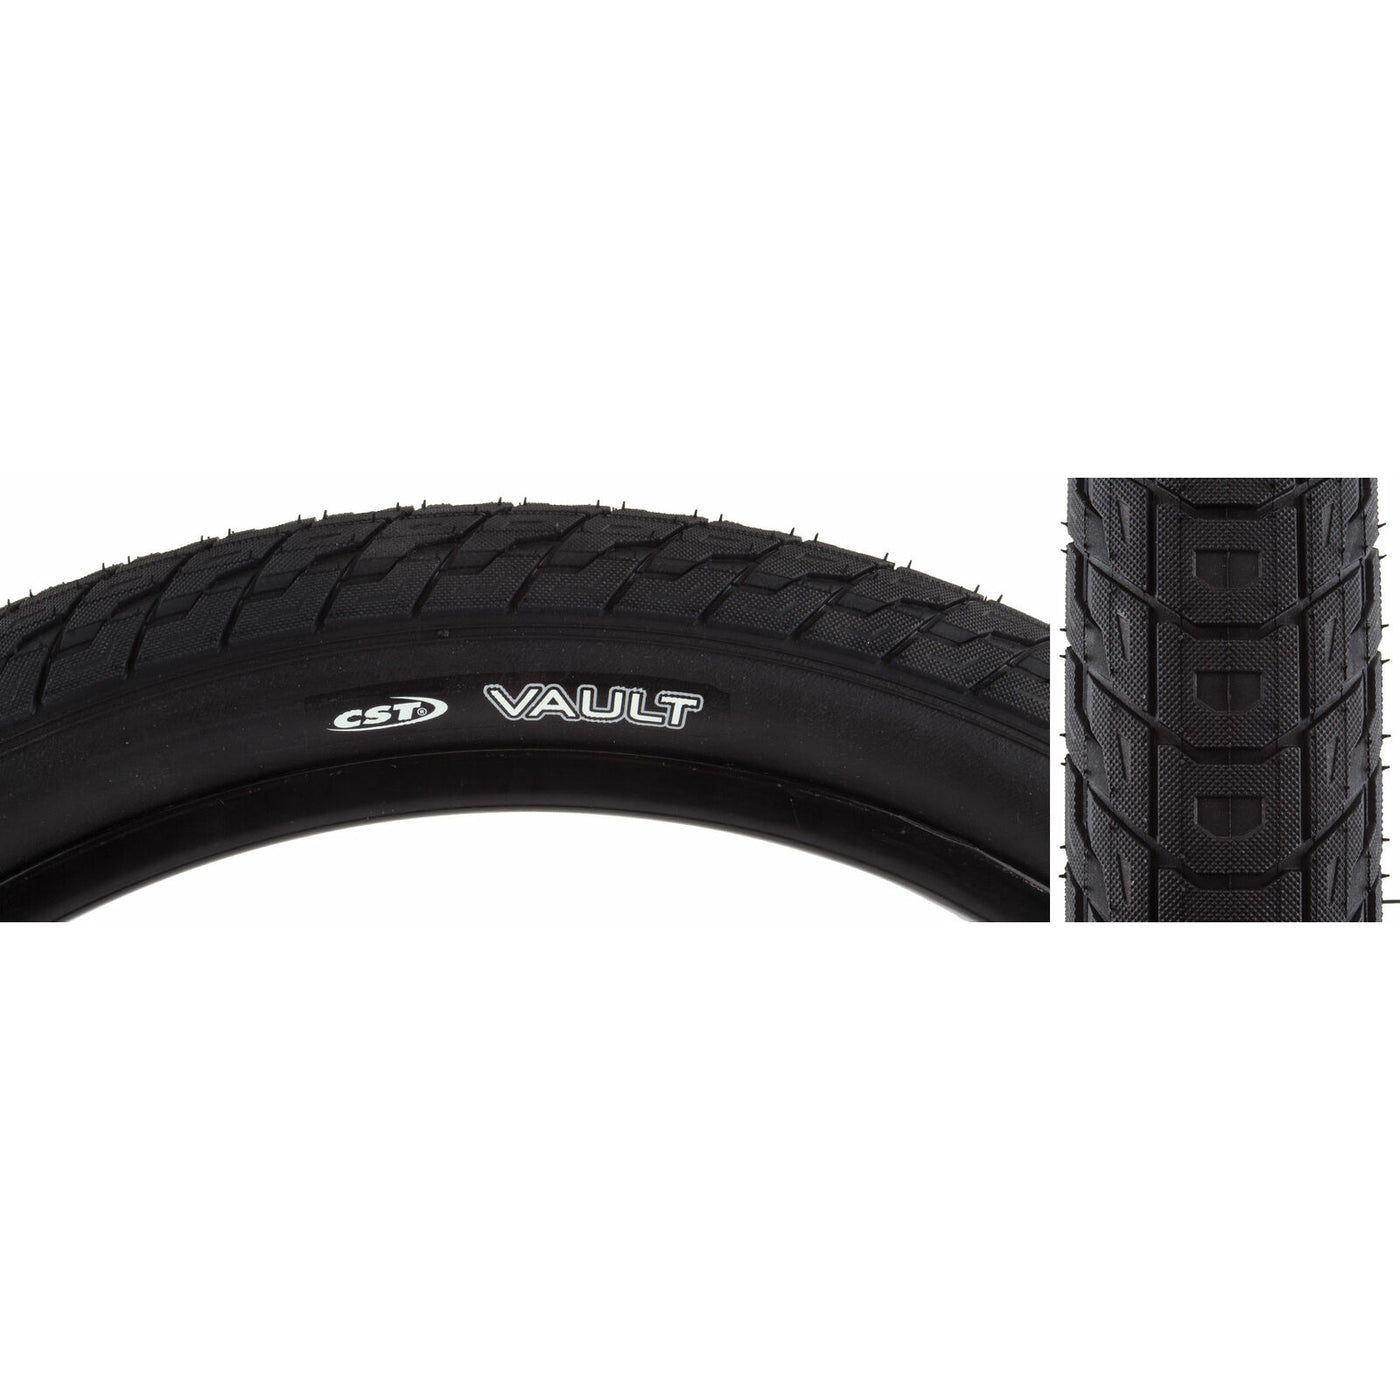 CST Vault BMX Freestyle Street Tire 20x2.4 60tpi 20" Kids Bicycle Tire Black